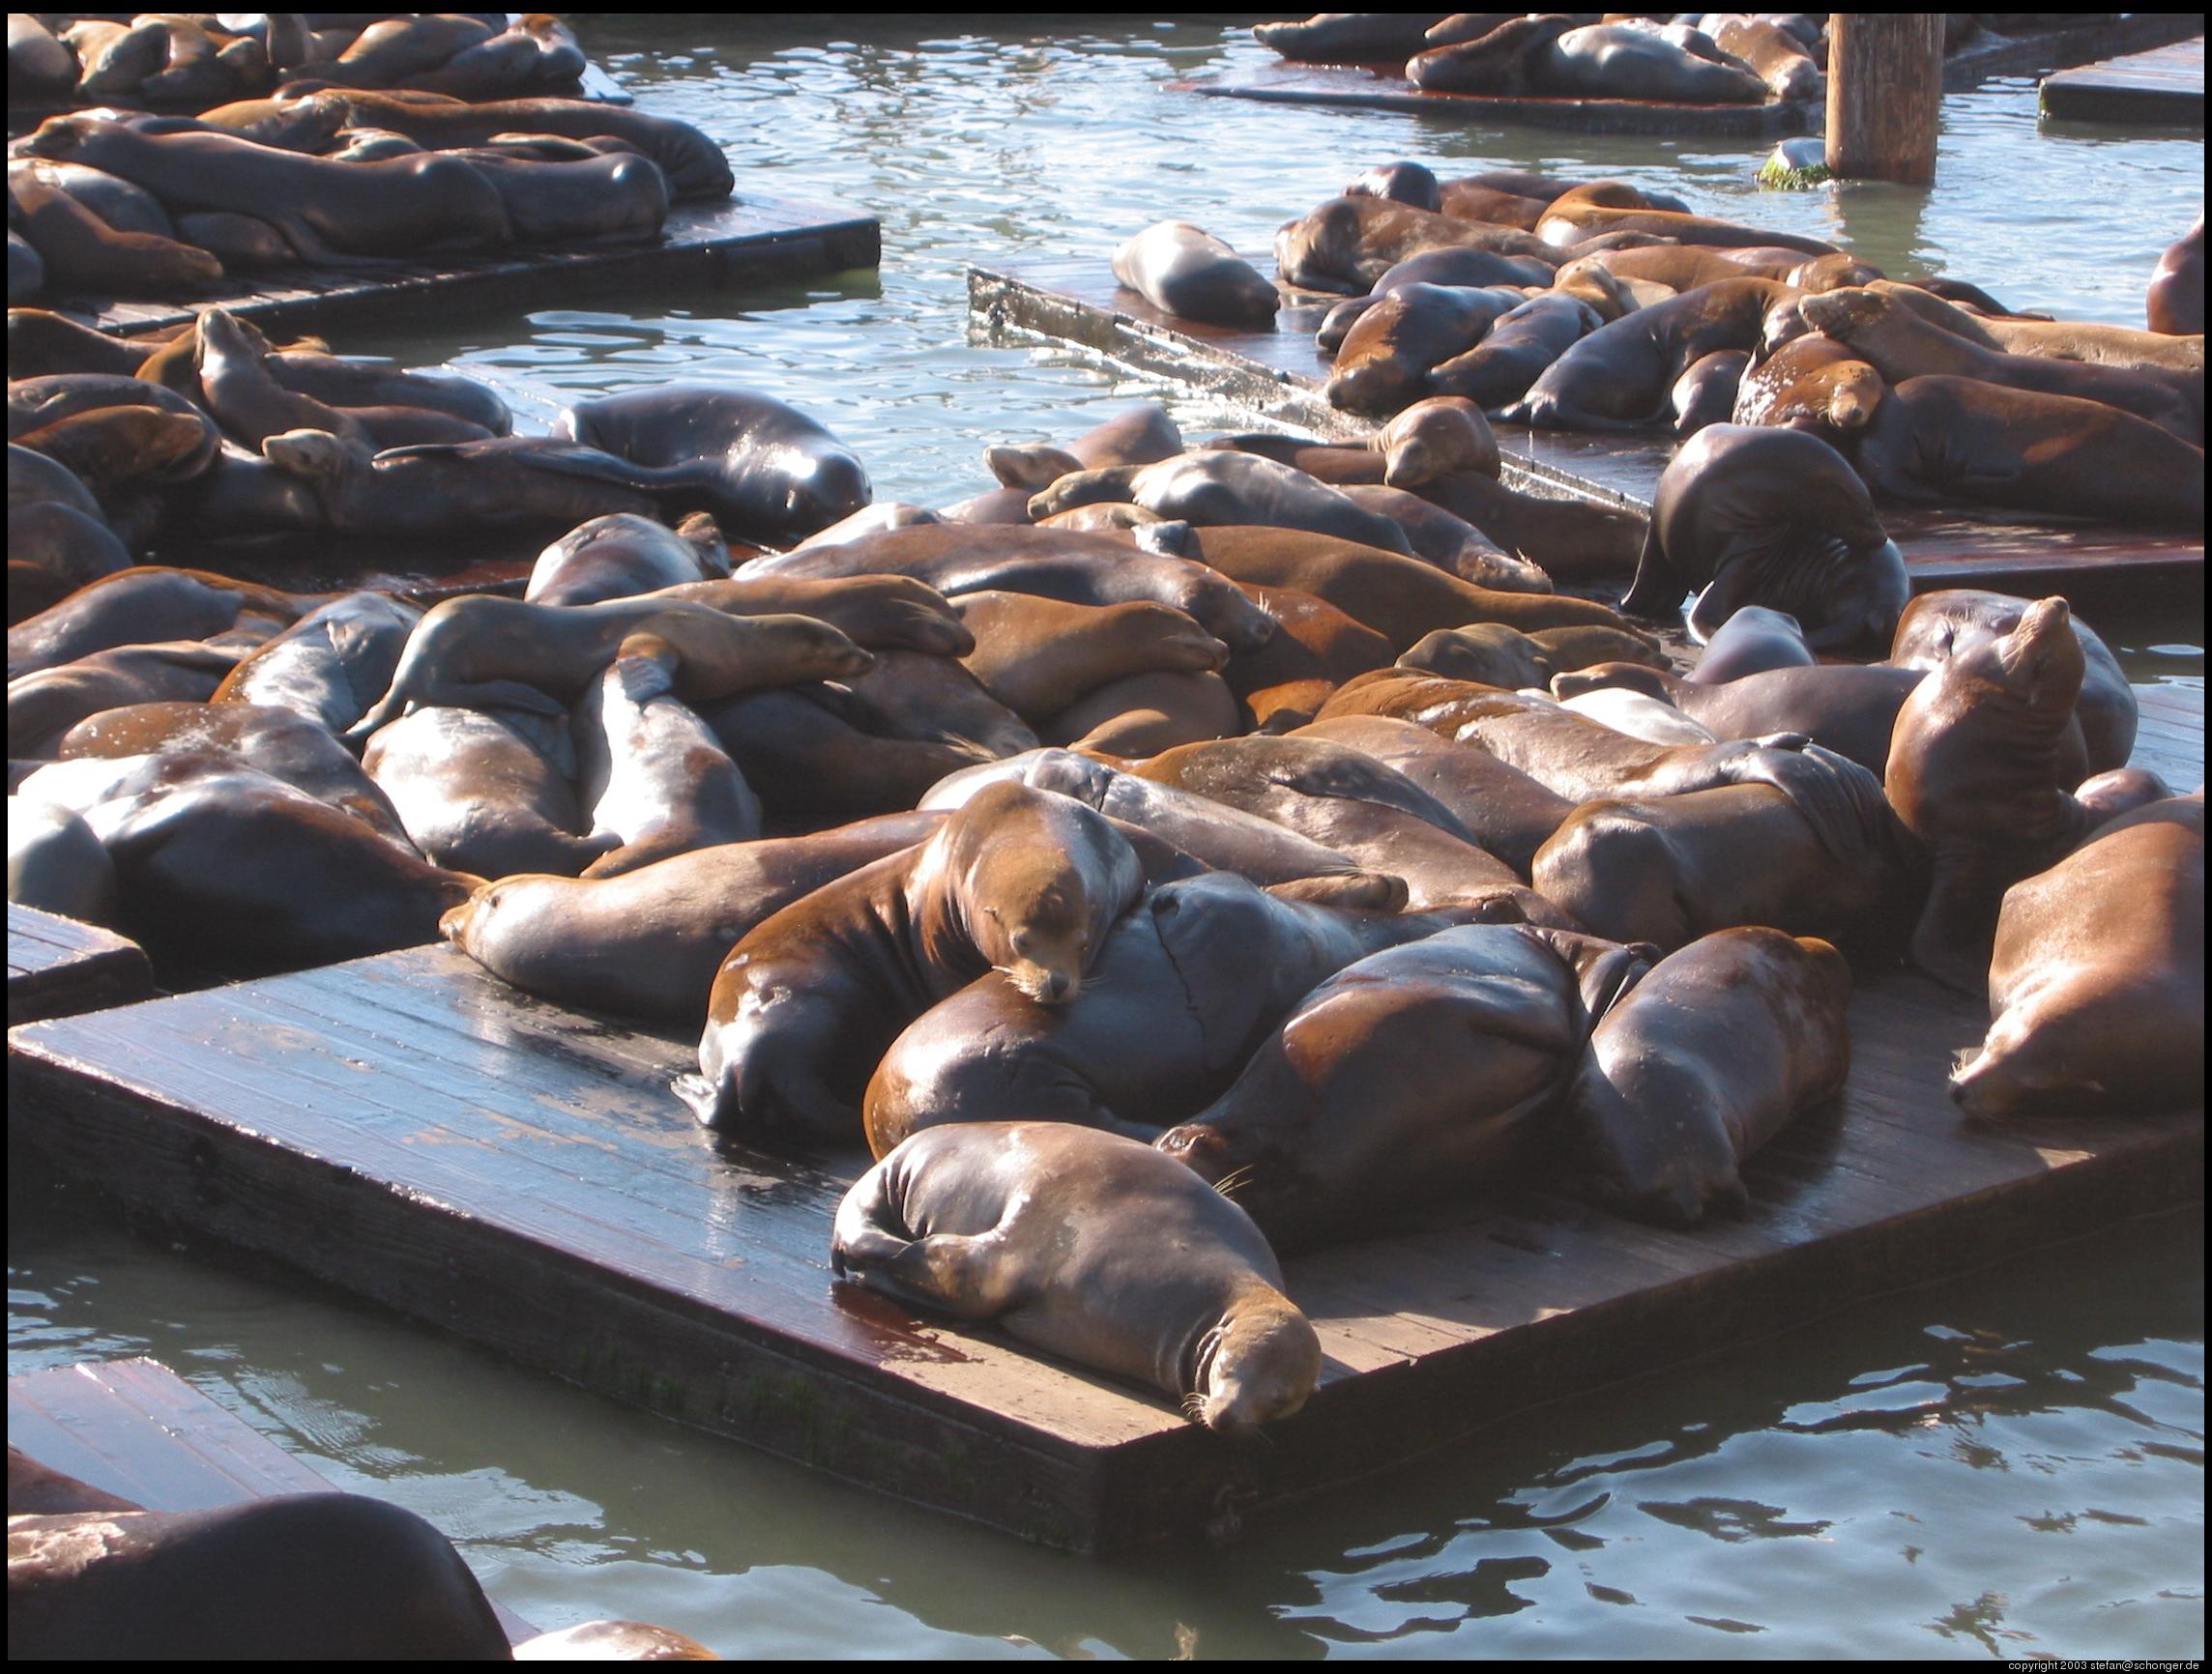 Sea lions at Pier 39